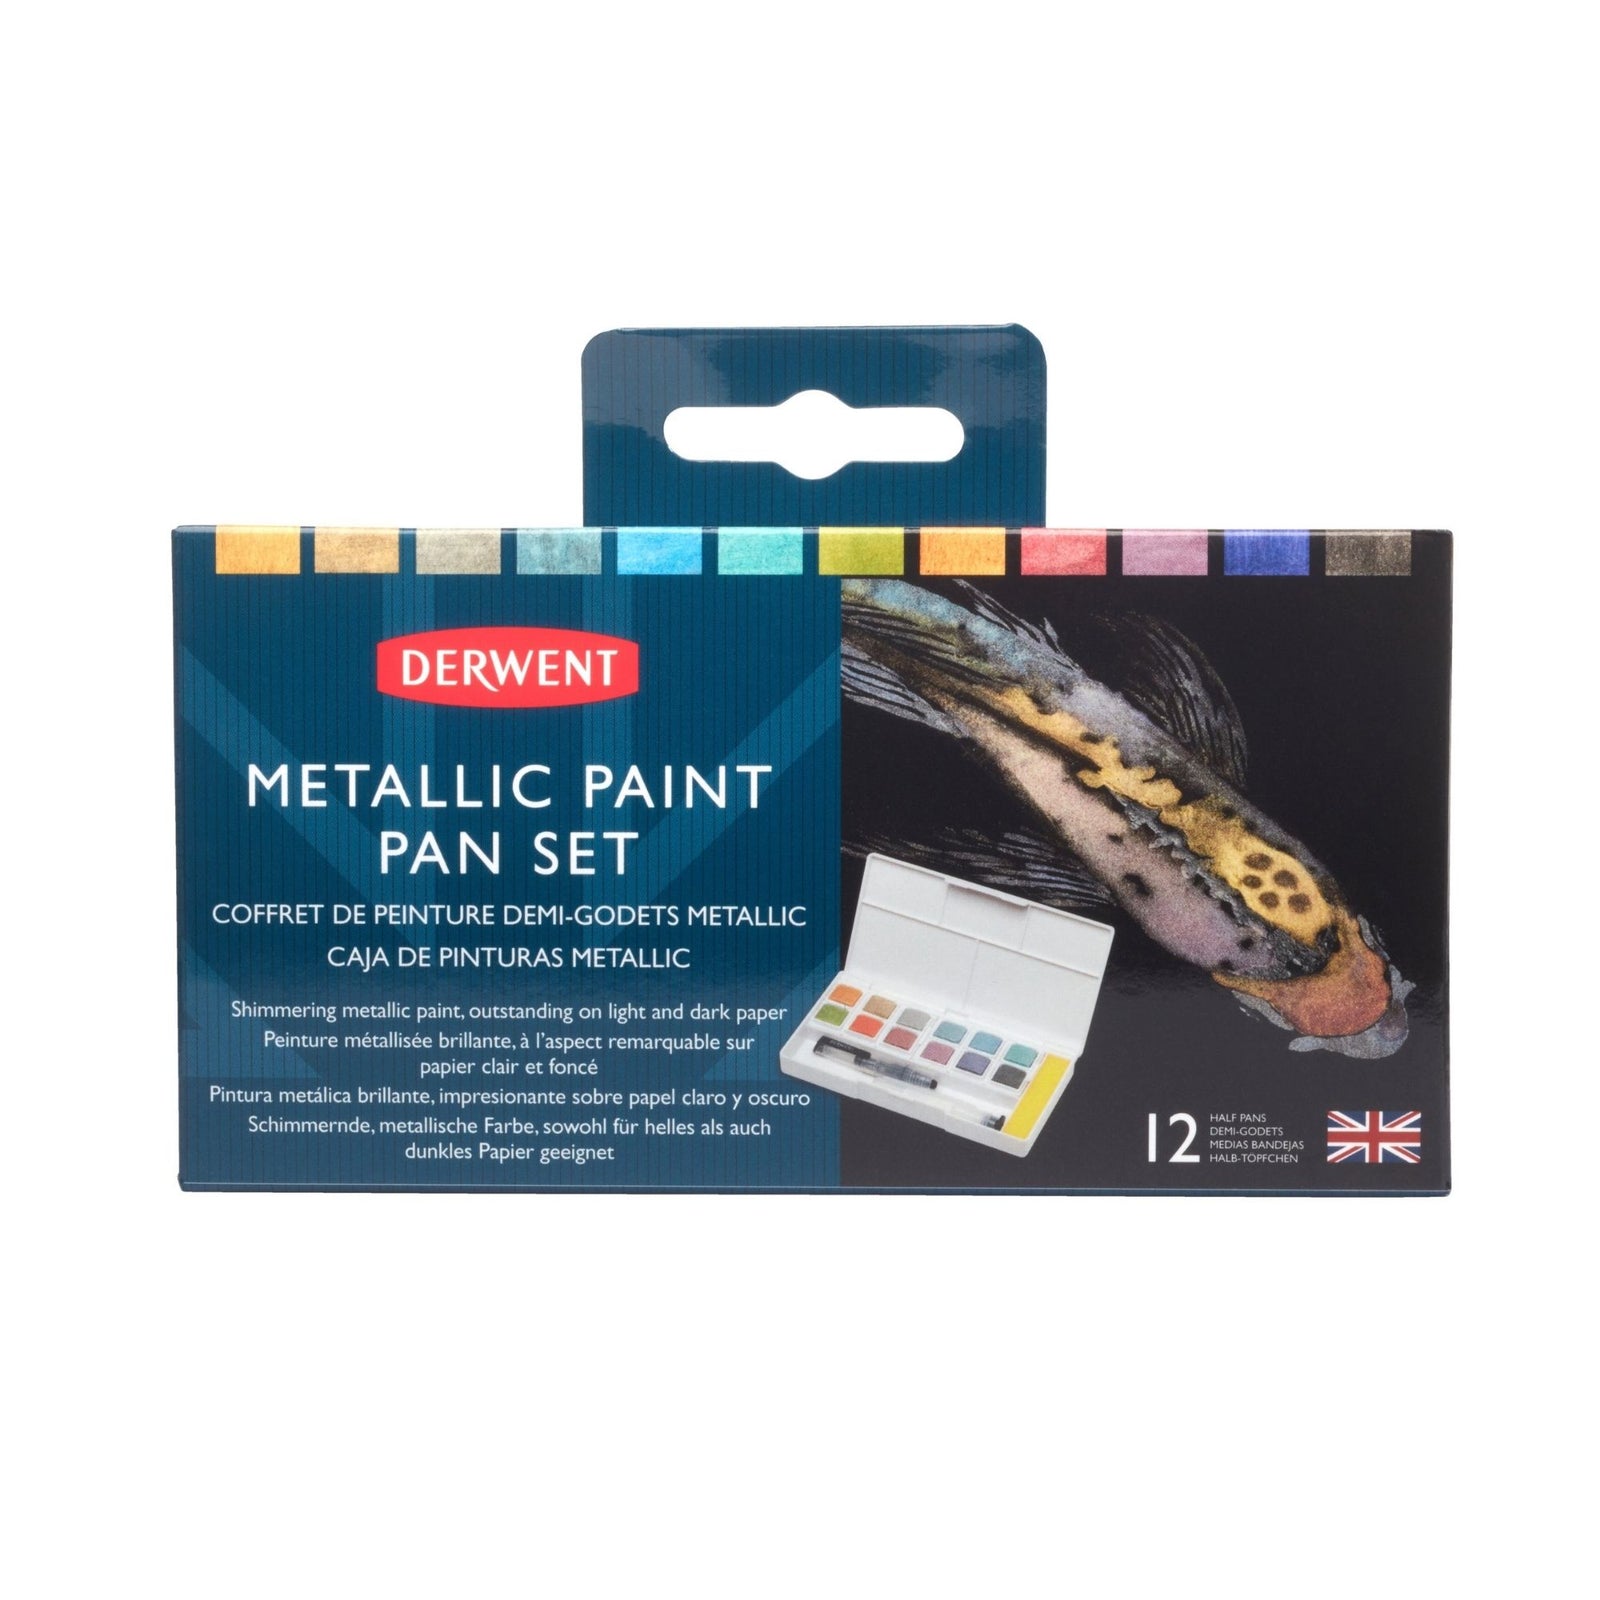 New Van Gogh Metallic & Interference Watercolor Pan Set + Art Nouveau